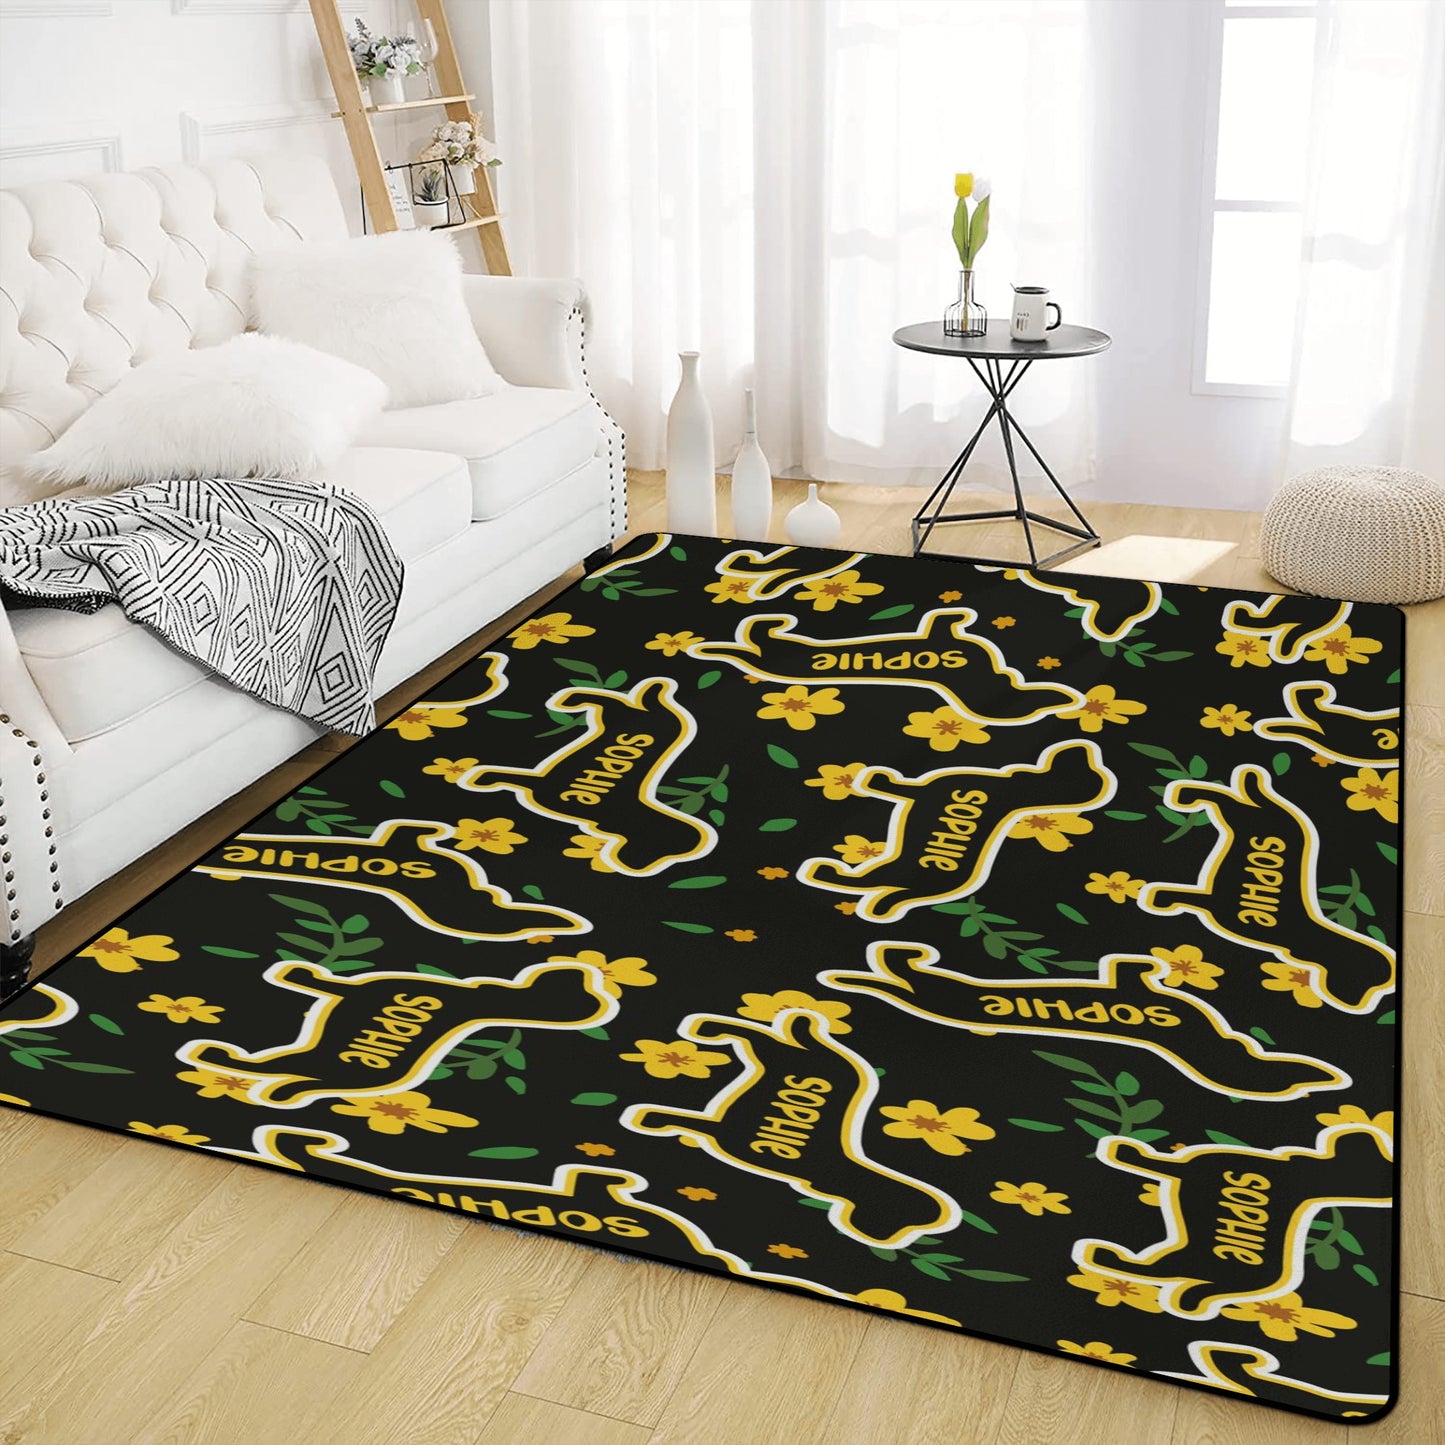 Custom Living Room Carpet Rug with dachshund Name - Living Room Carpet Rug